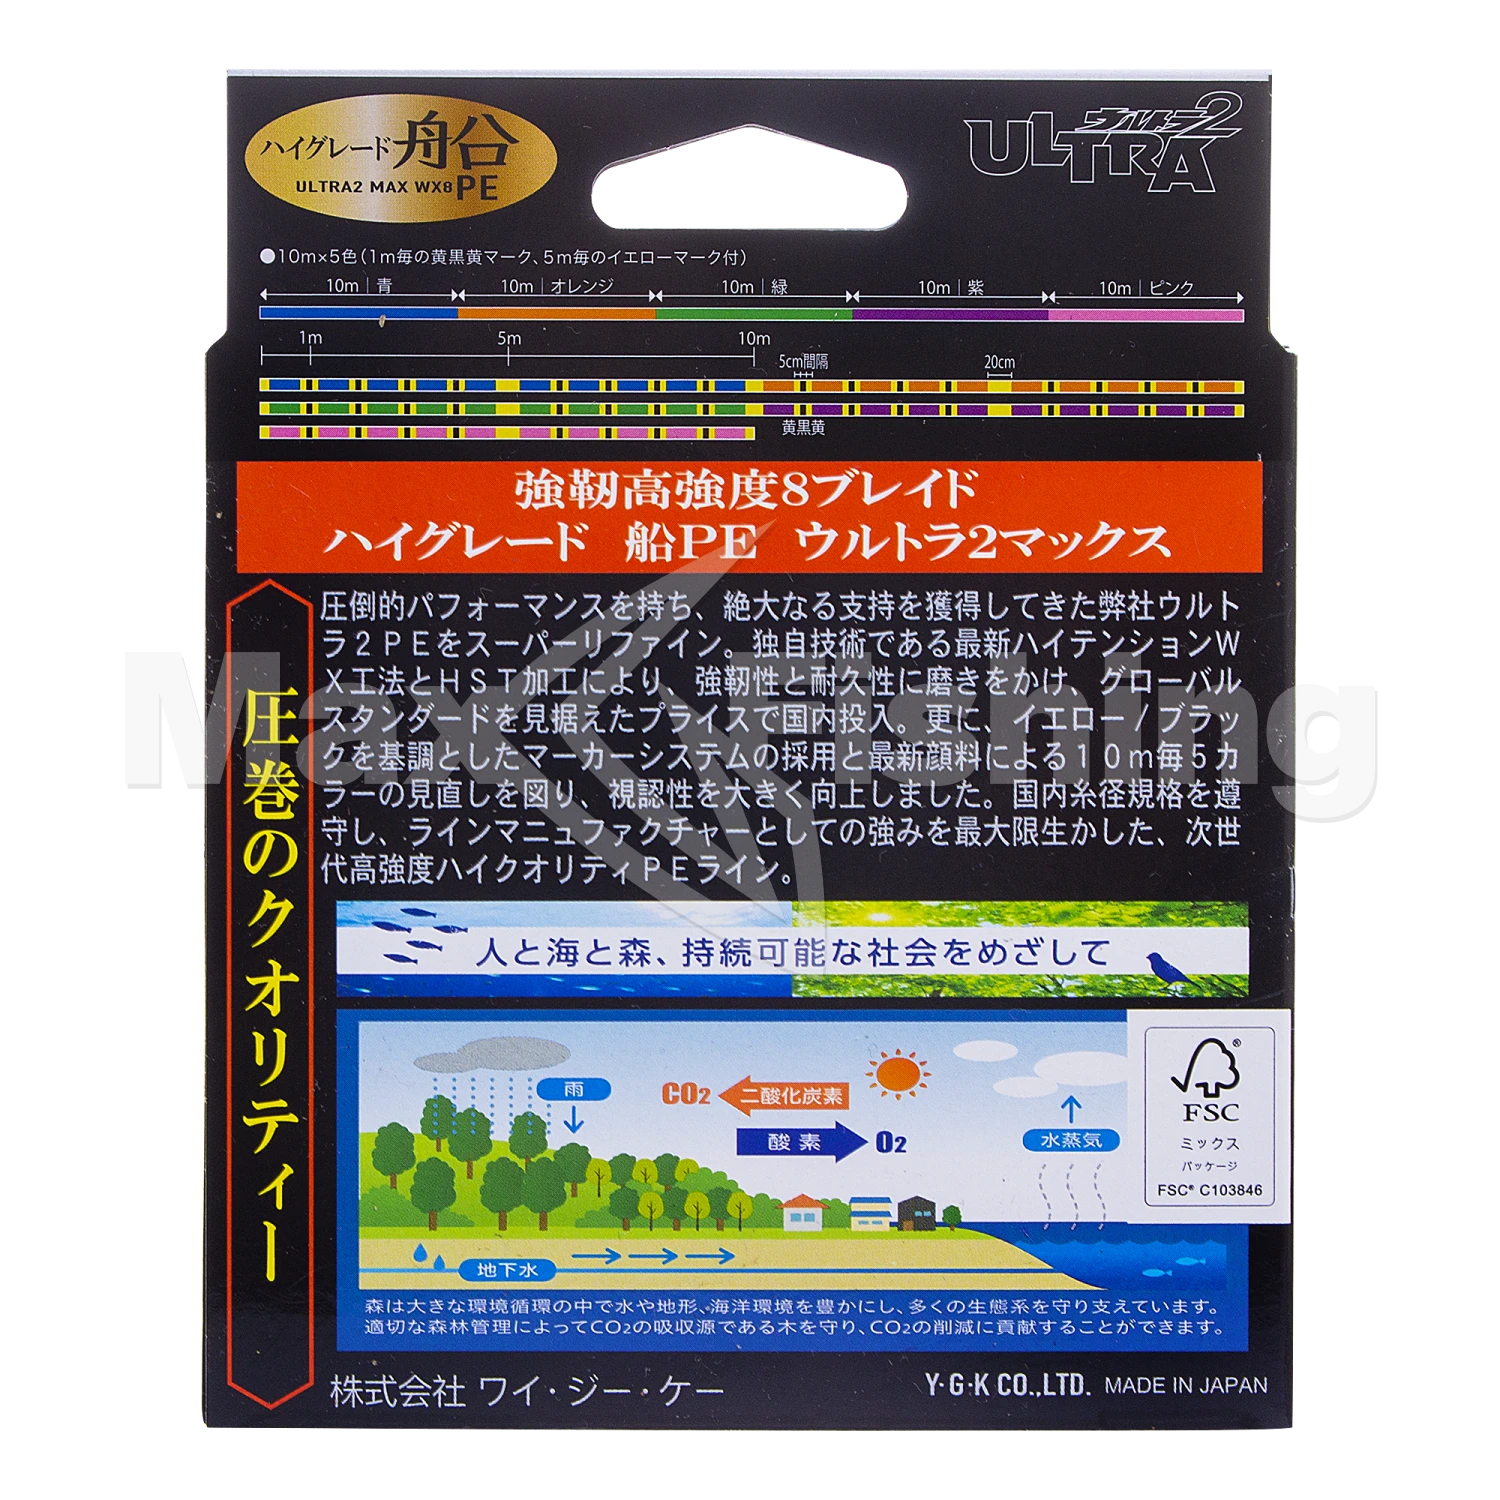 Шнур плетеный YGK Ultra2 Max WX8 #3,0 0,285мм 300м (5color)